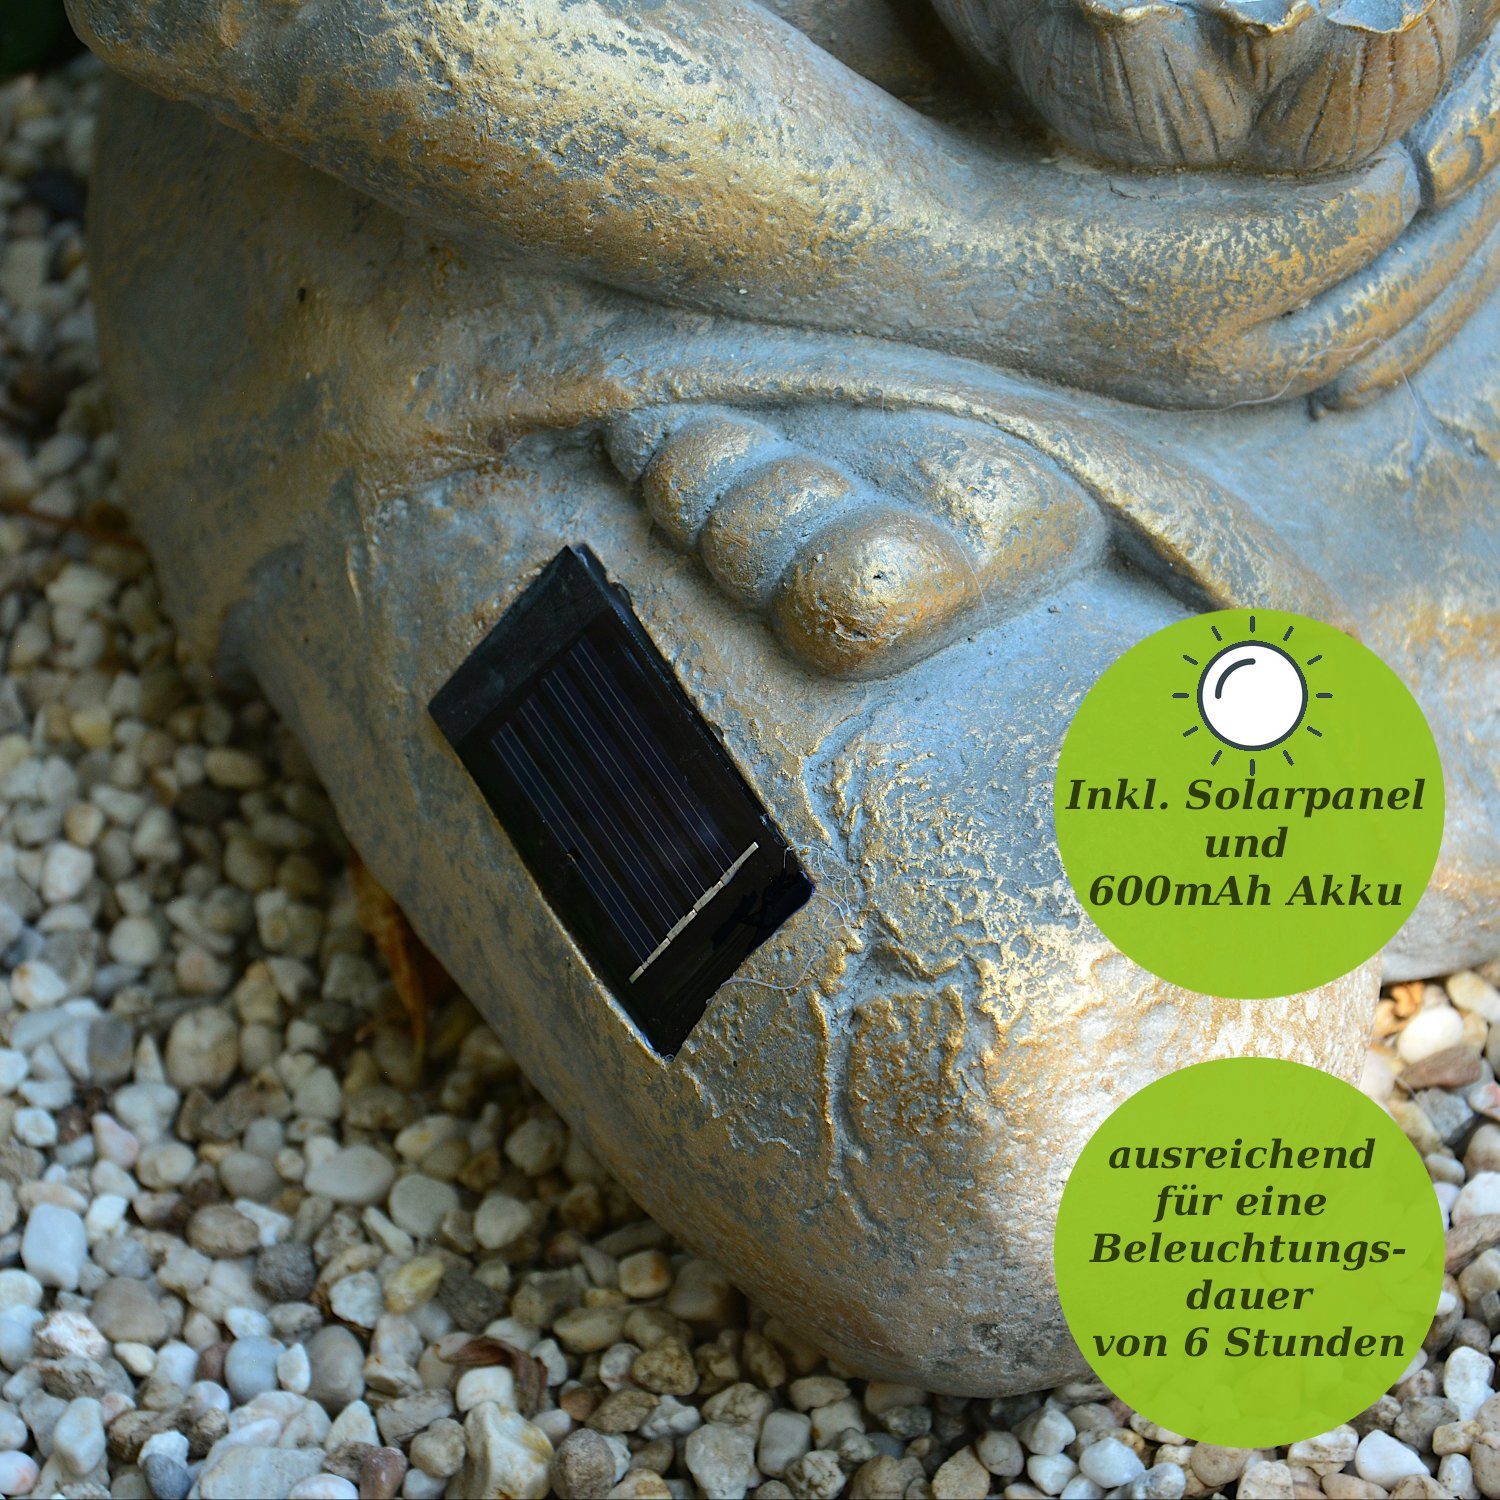 INtrenDU Gartenfigur Garten Buddha Figur mit Sensorautomatik Solarbeleuchtung Sensorautomatik, und 44cm